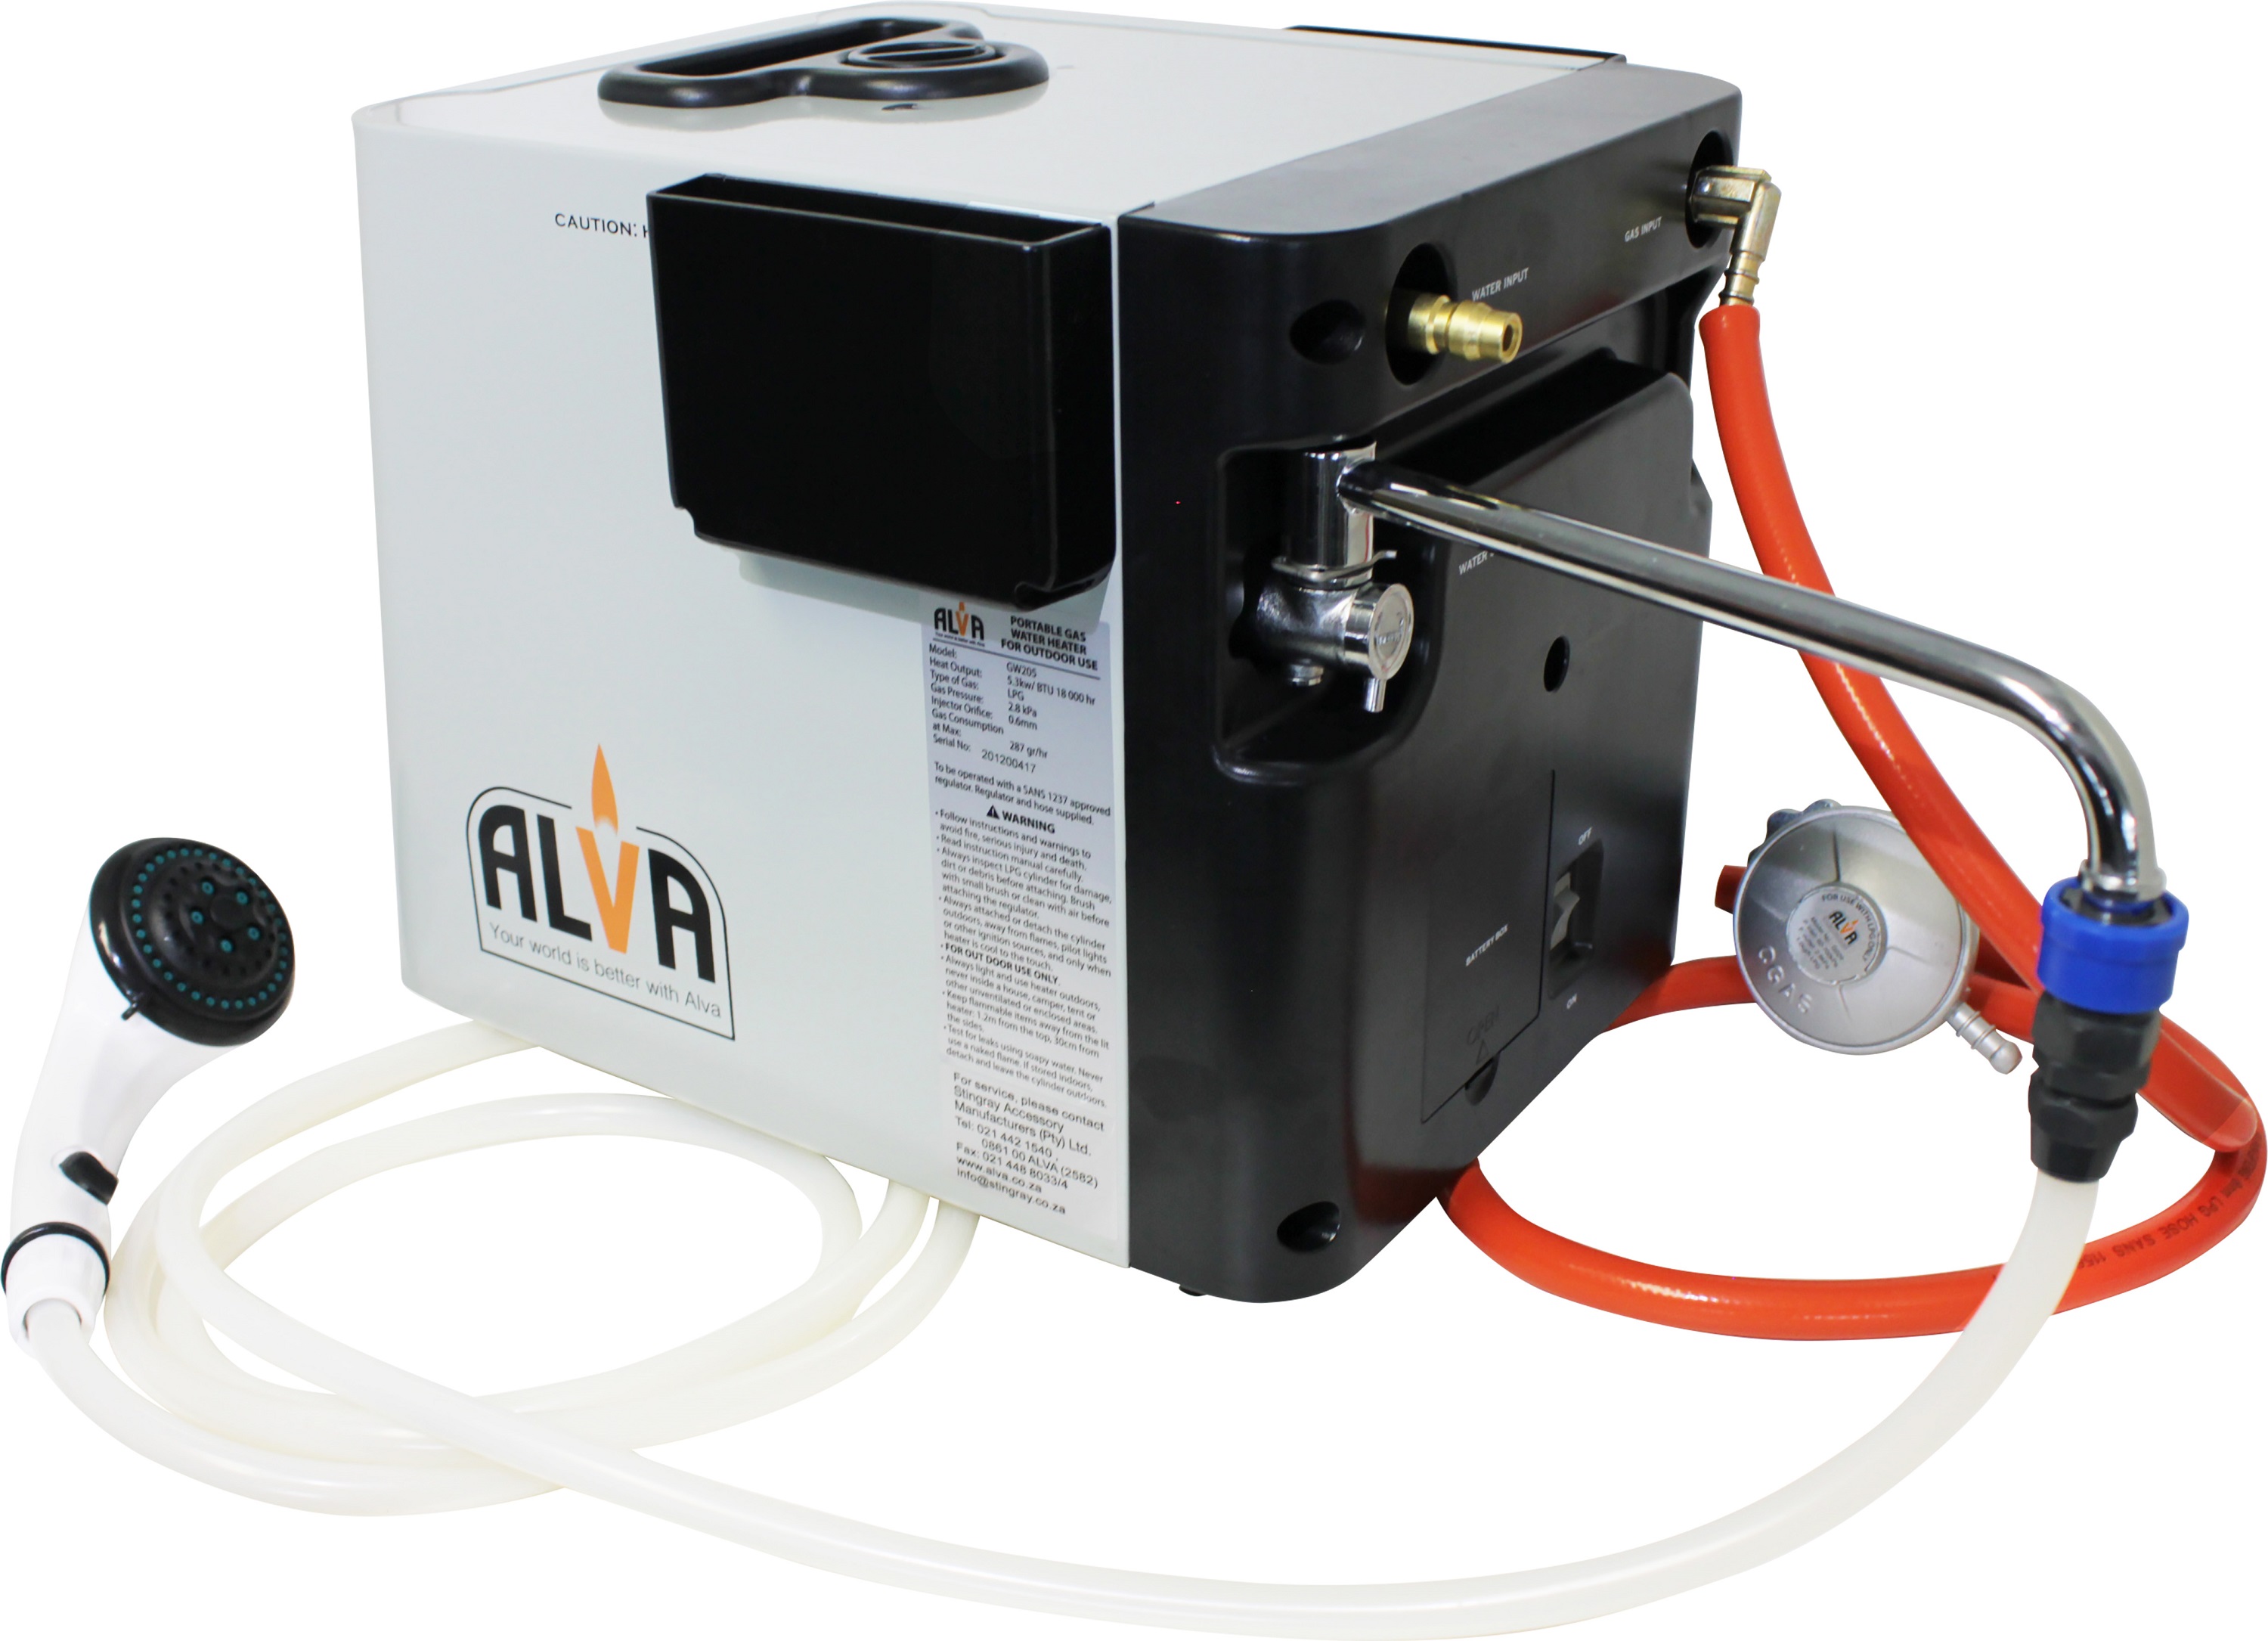 Alva - Portable Gas Water Heater (Camping)